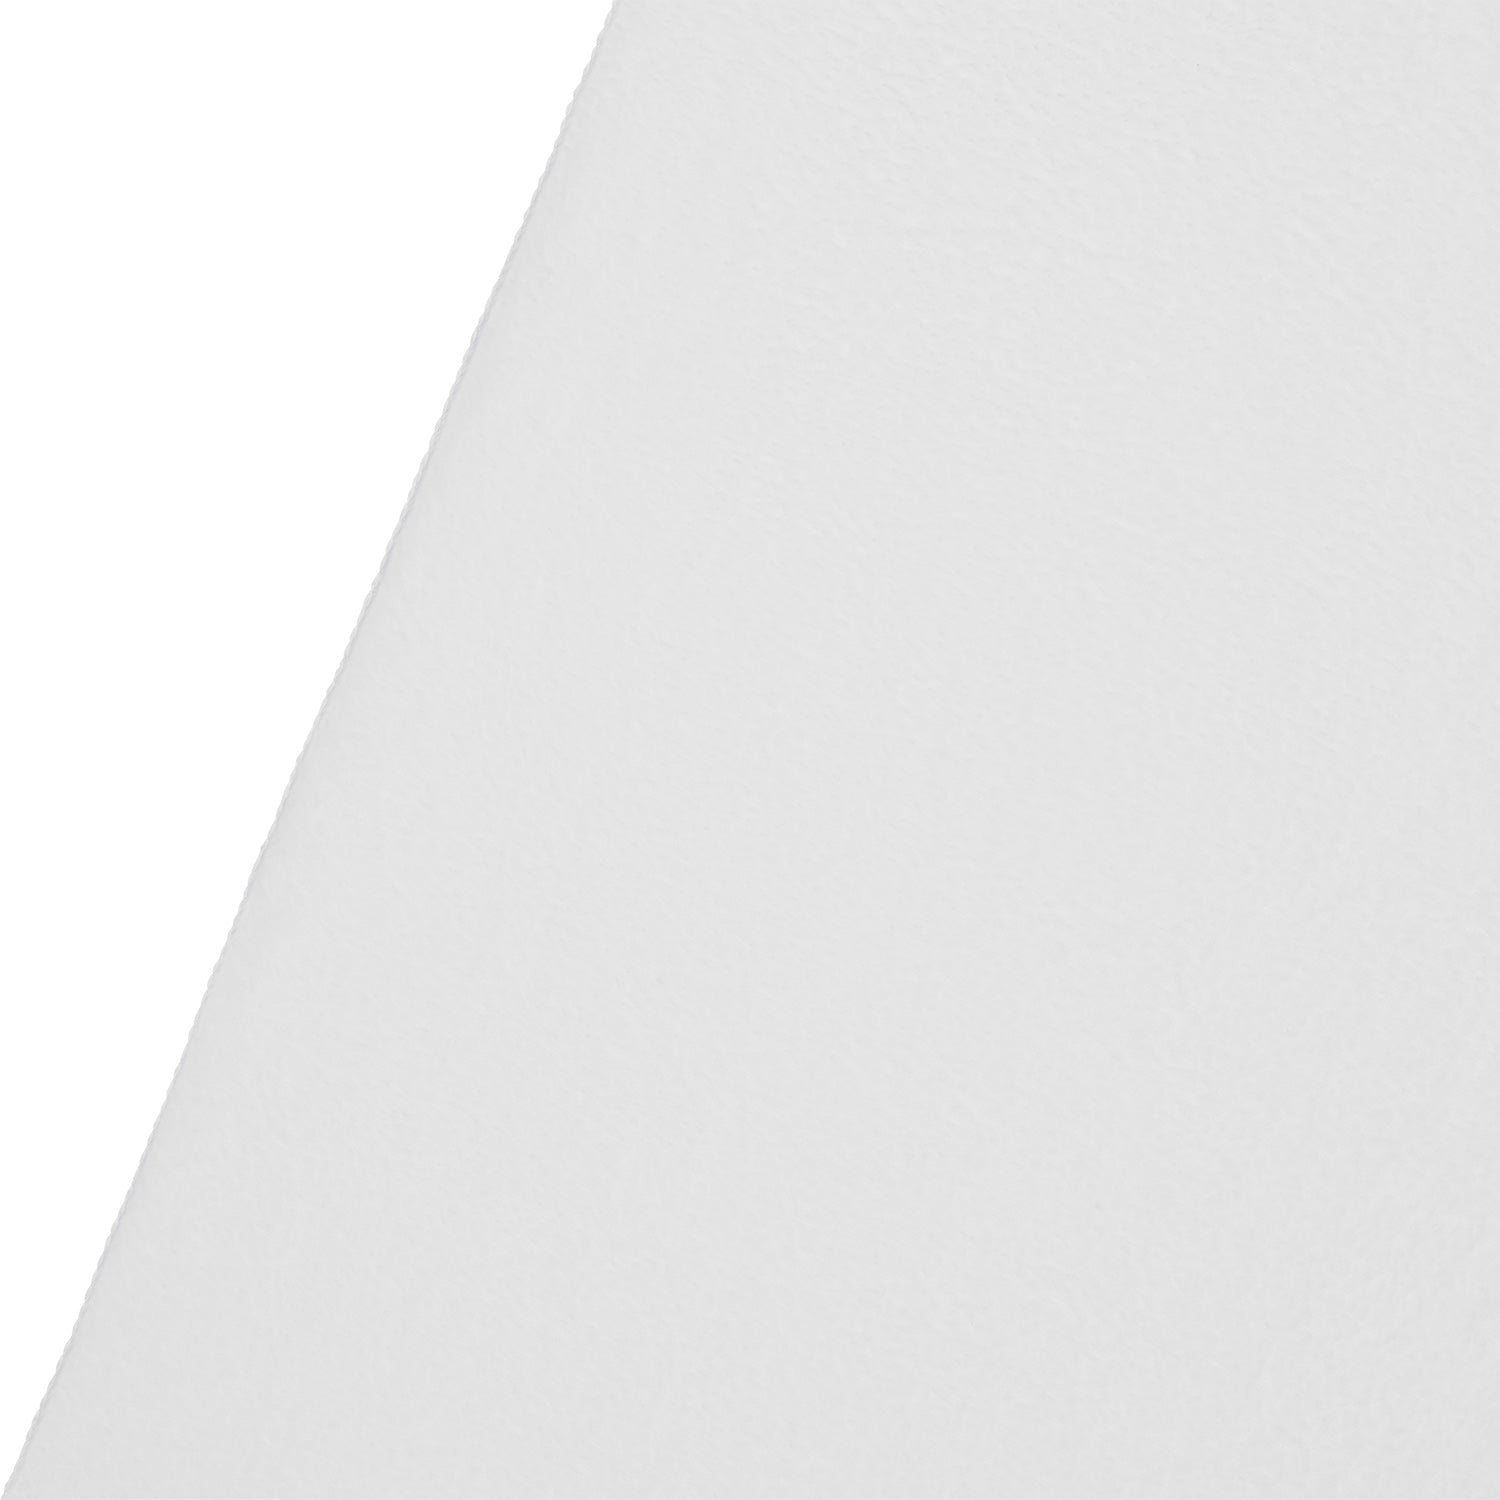 Wrinkle-Resistant Backdrop - High-Key White (9' x 20')